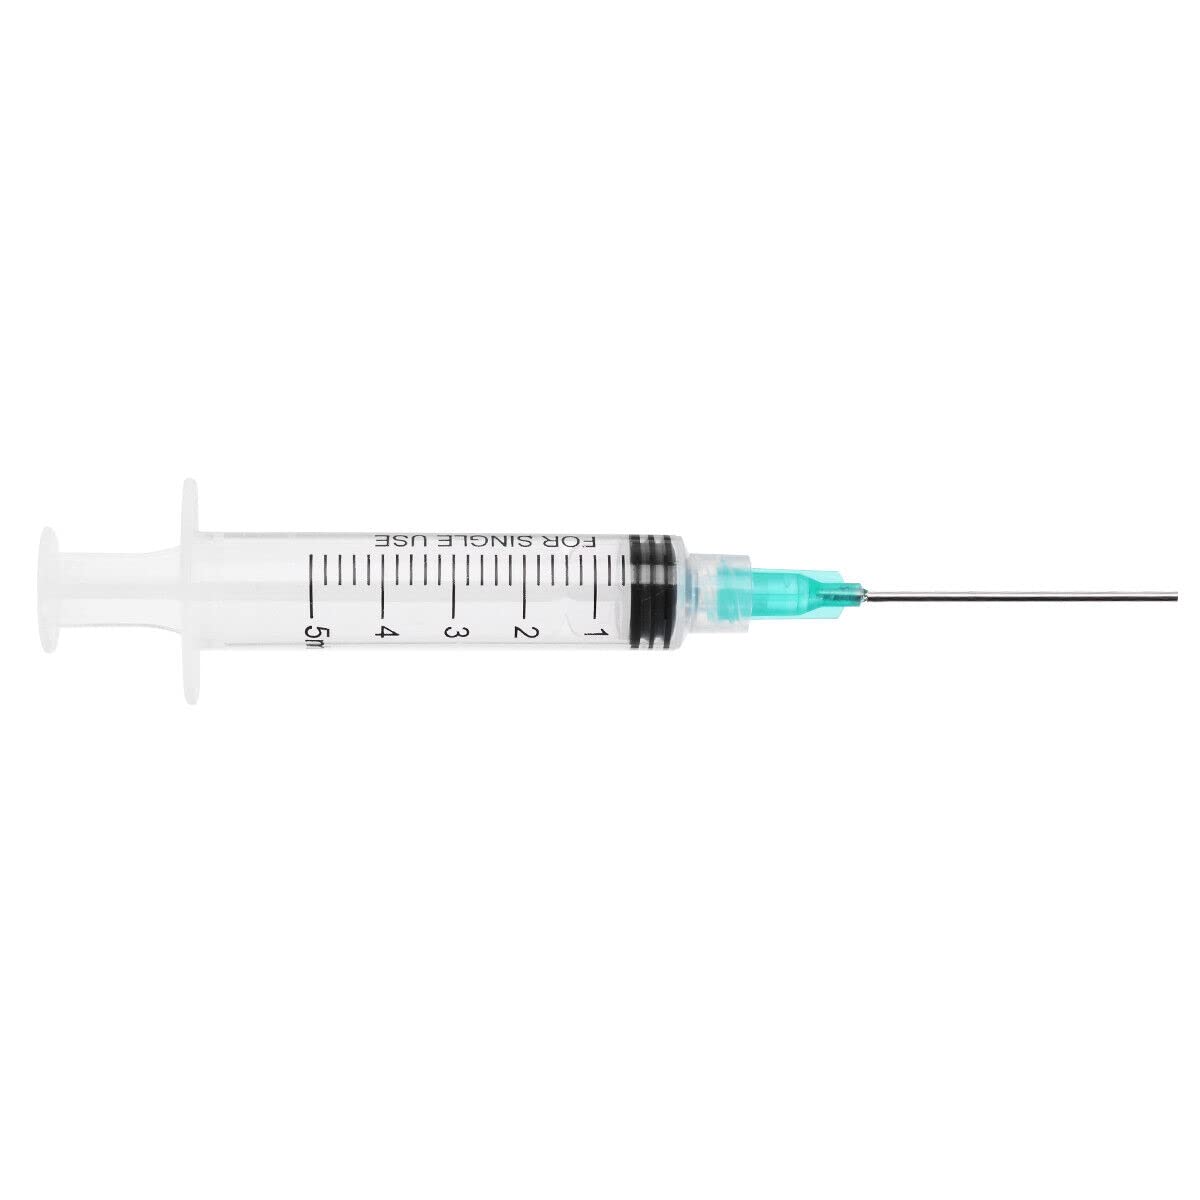 5 Pack 5ml Ink Filling Syringe Luer Lock Plastic Syringes With Platic 1.5'' Blunt Needle Tip For Liquid Glue Oil Ink